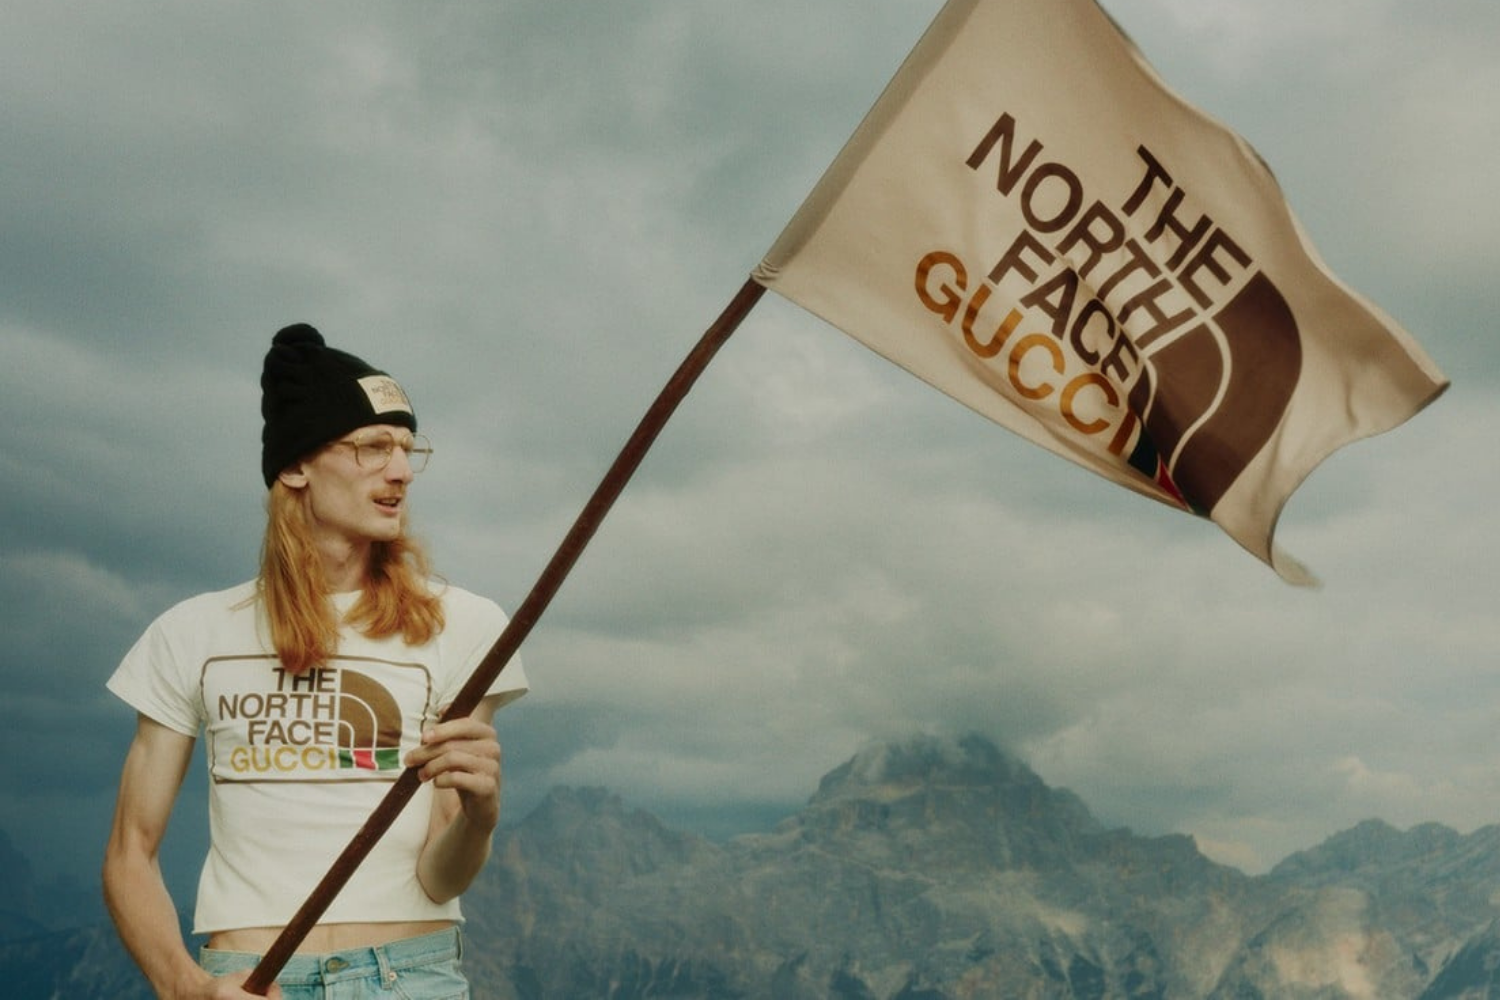 Gucci en The North Face werken opnieuw samen